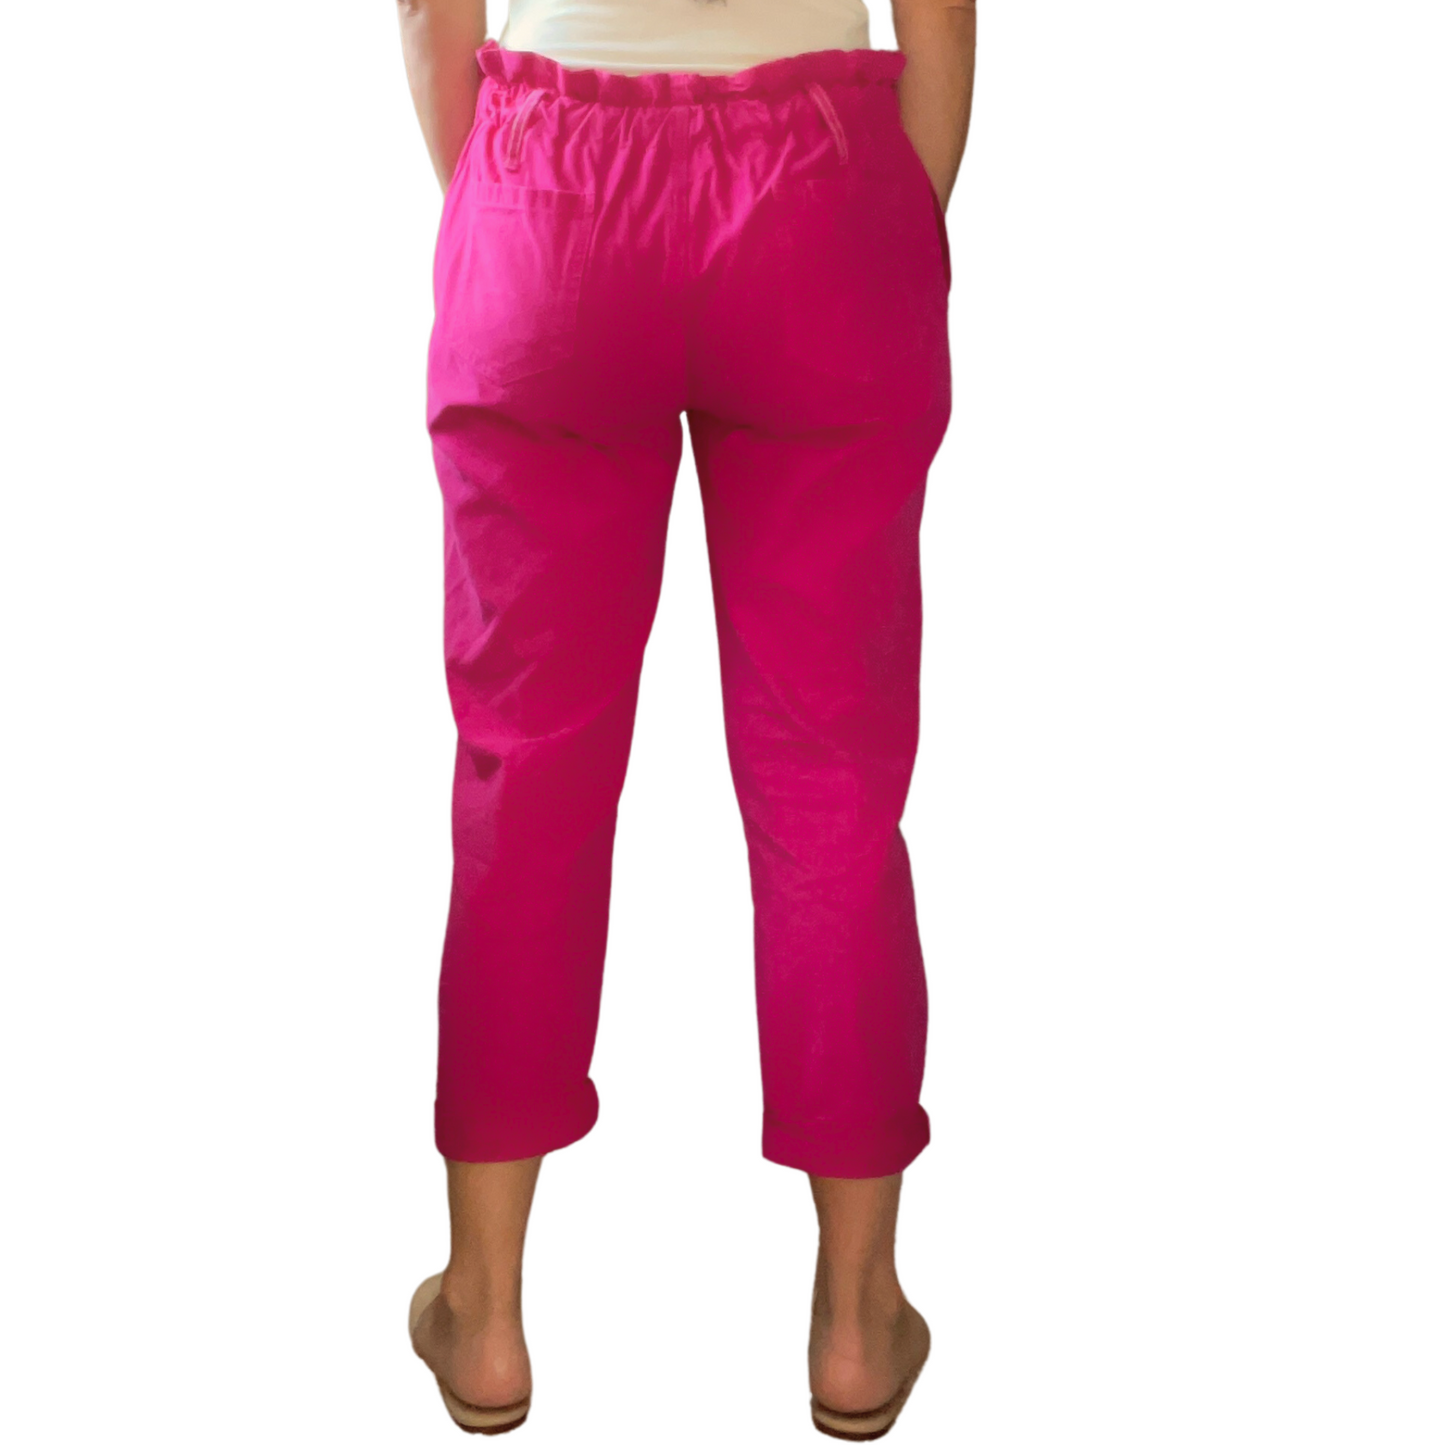 Paris Pink Pants